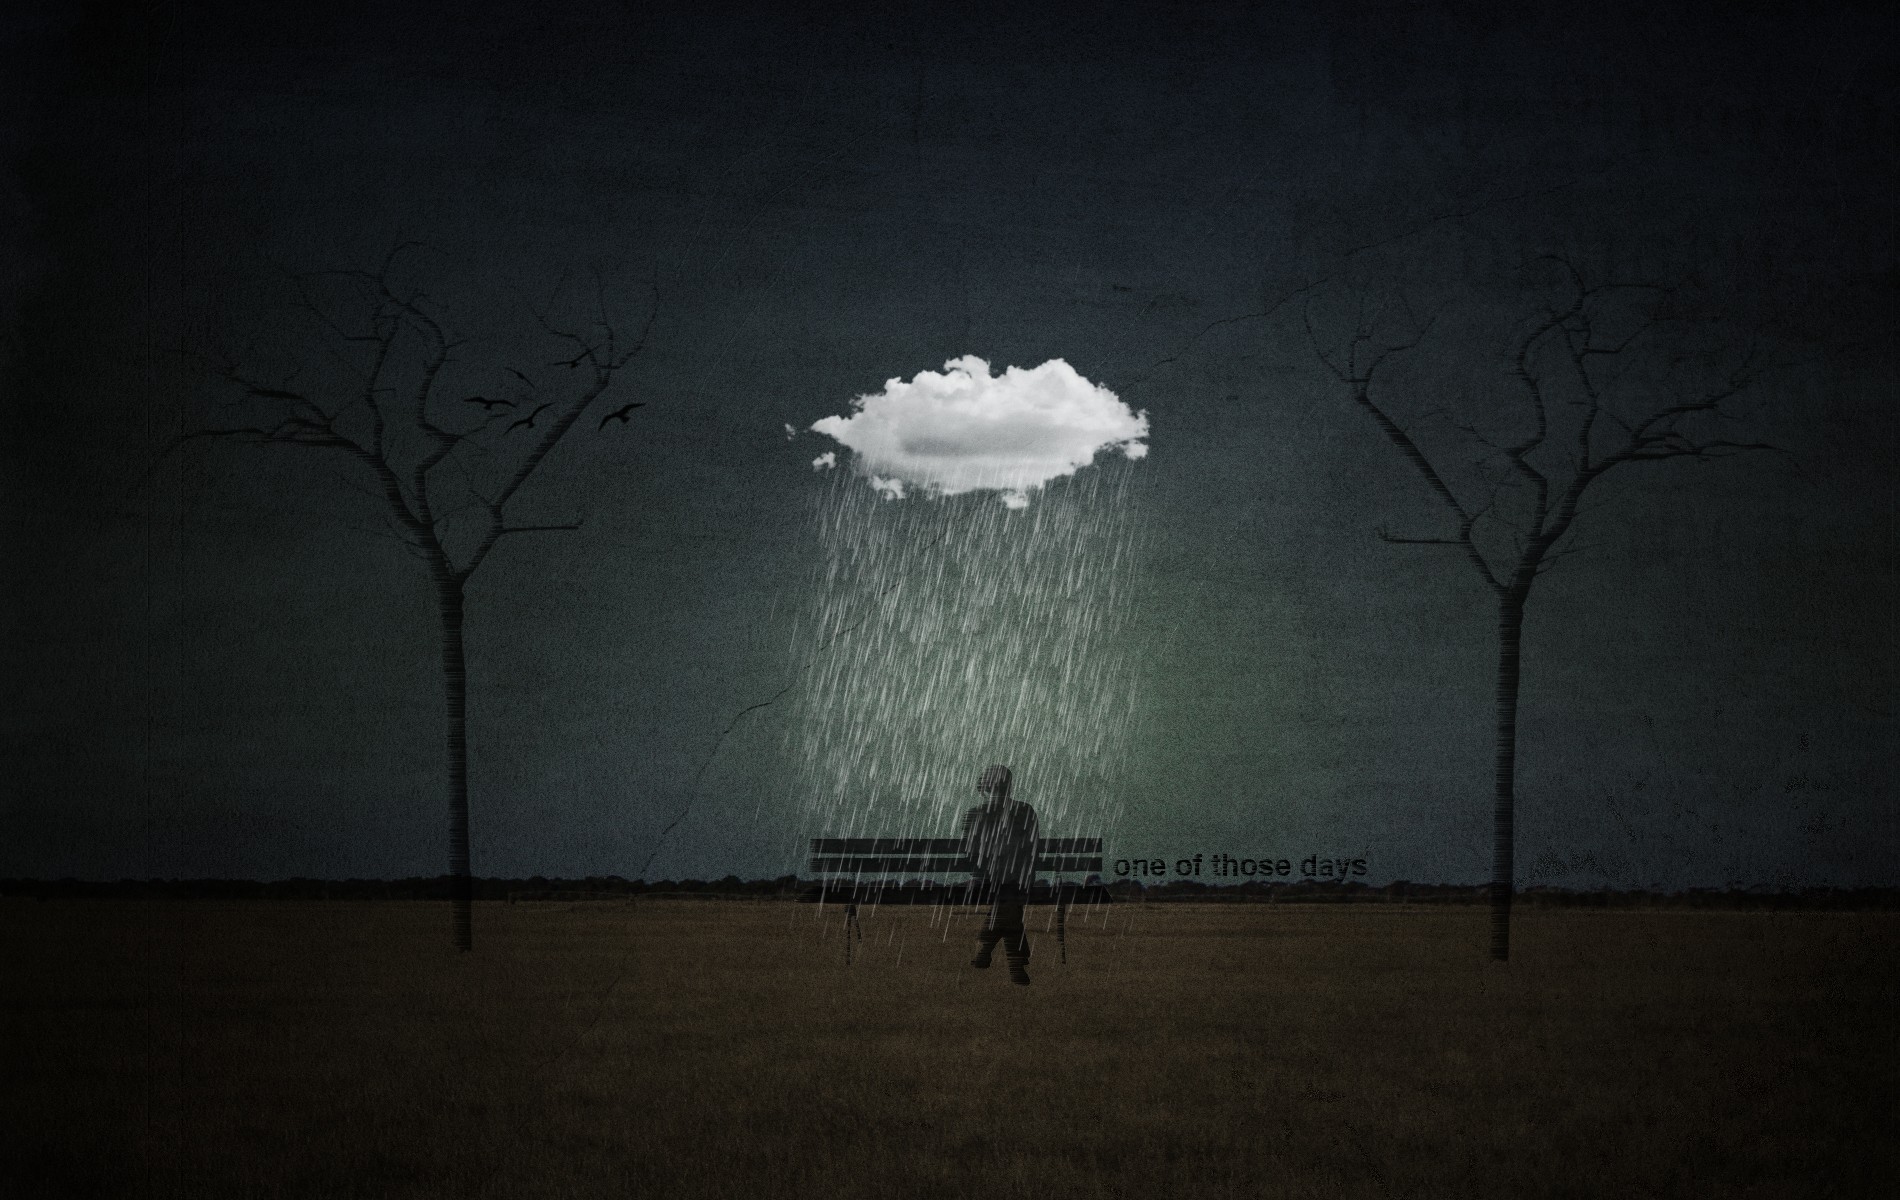 General 1900x1200 digital art artwork men silhouette trees ground horizon clouds rain bench sitting quote alone